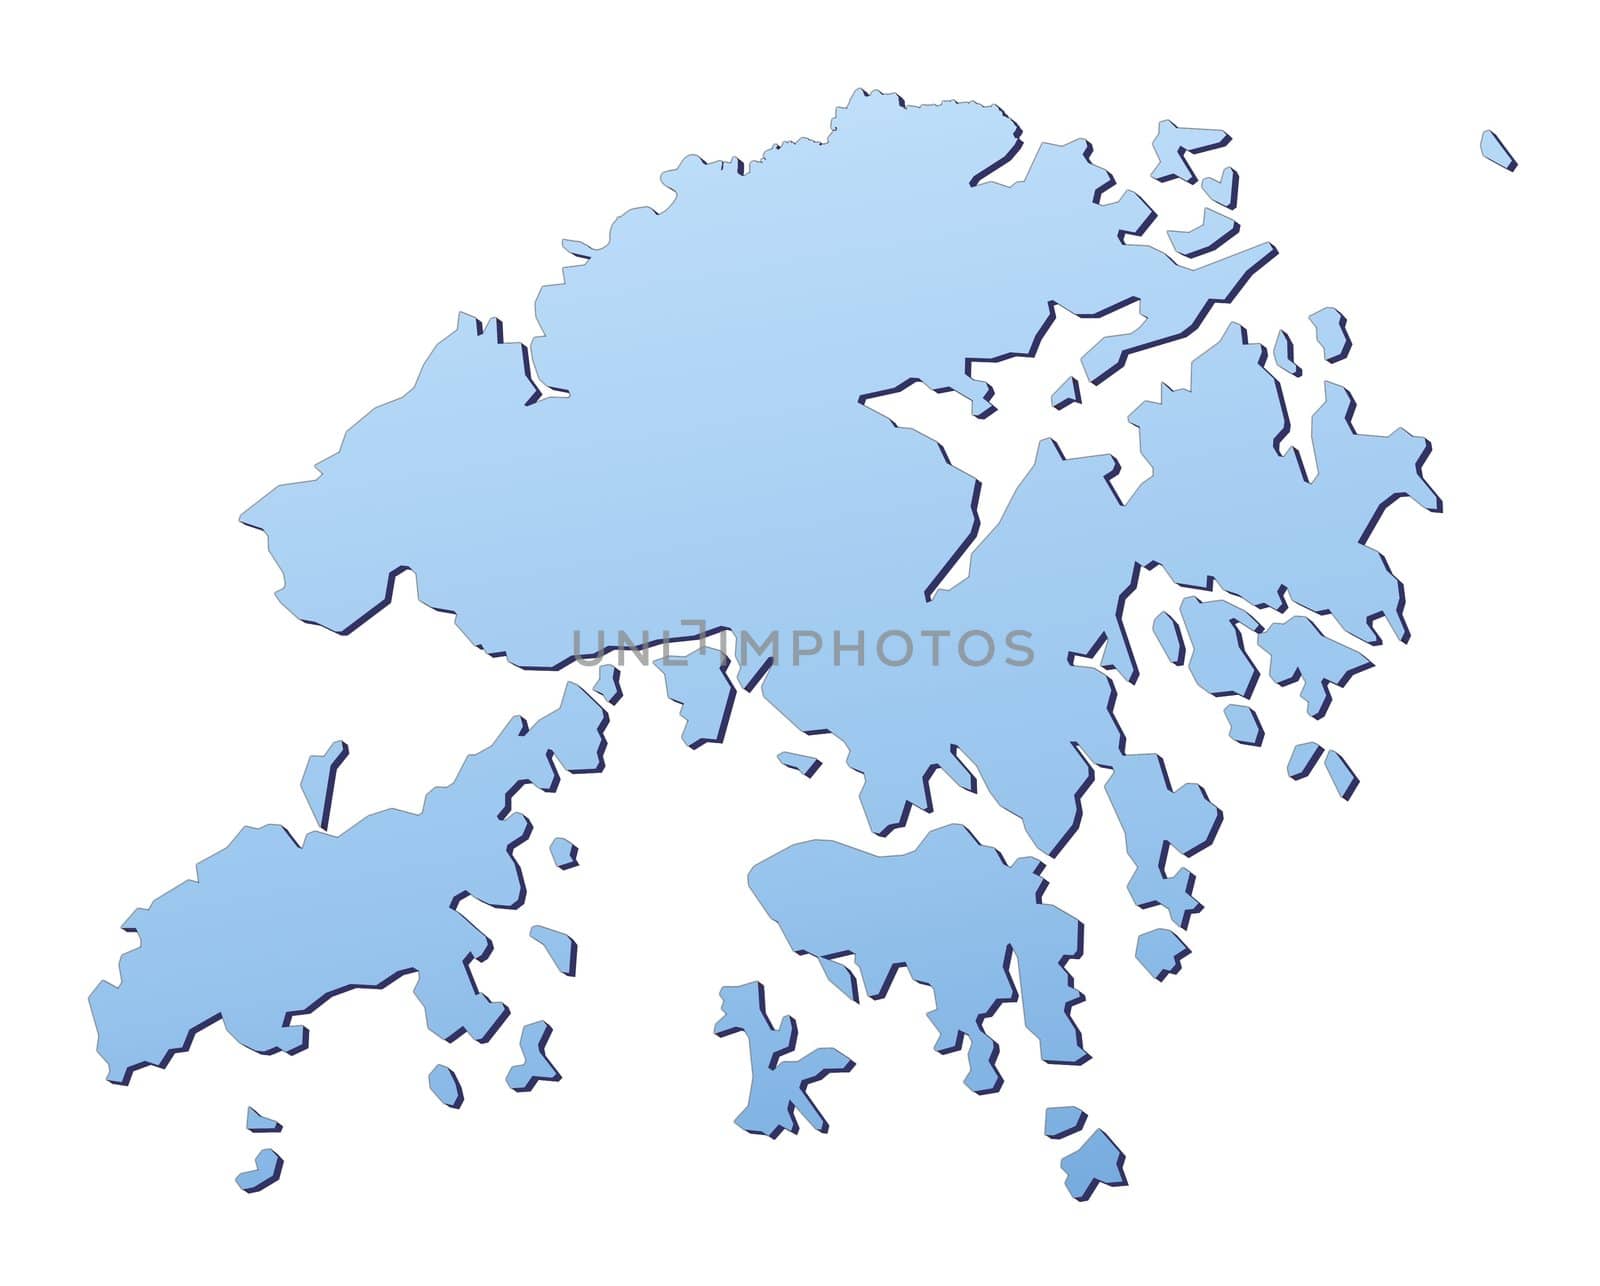 Hong Kong map by skvoor